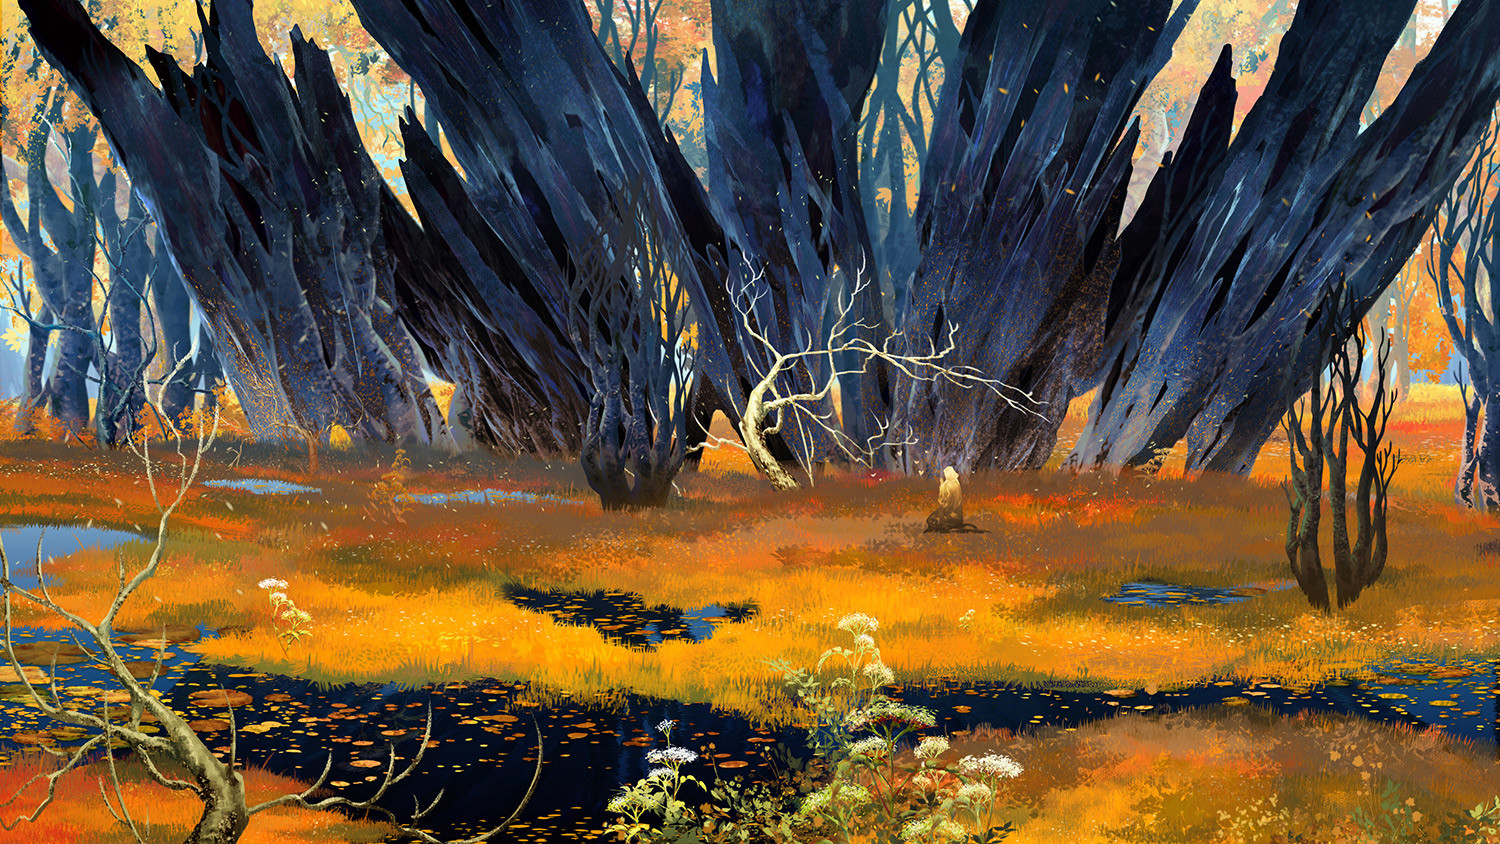 General 1500x844 watermother Jian digital art fantasy art forest trees amber fall swamp